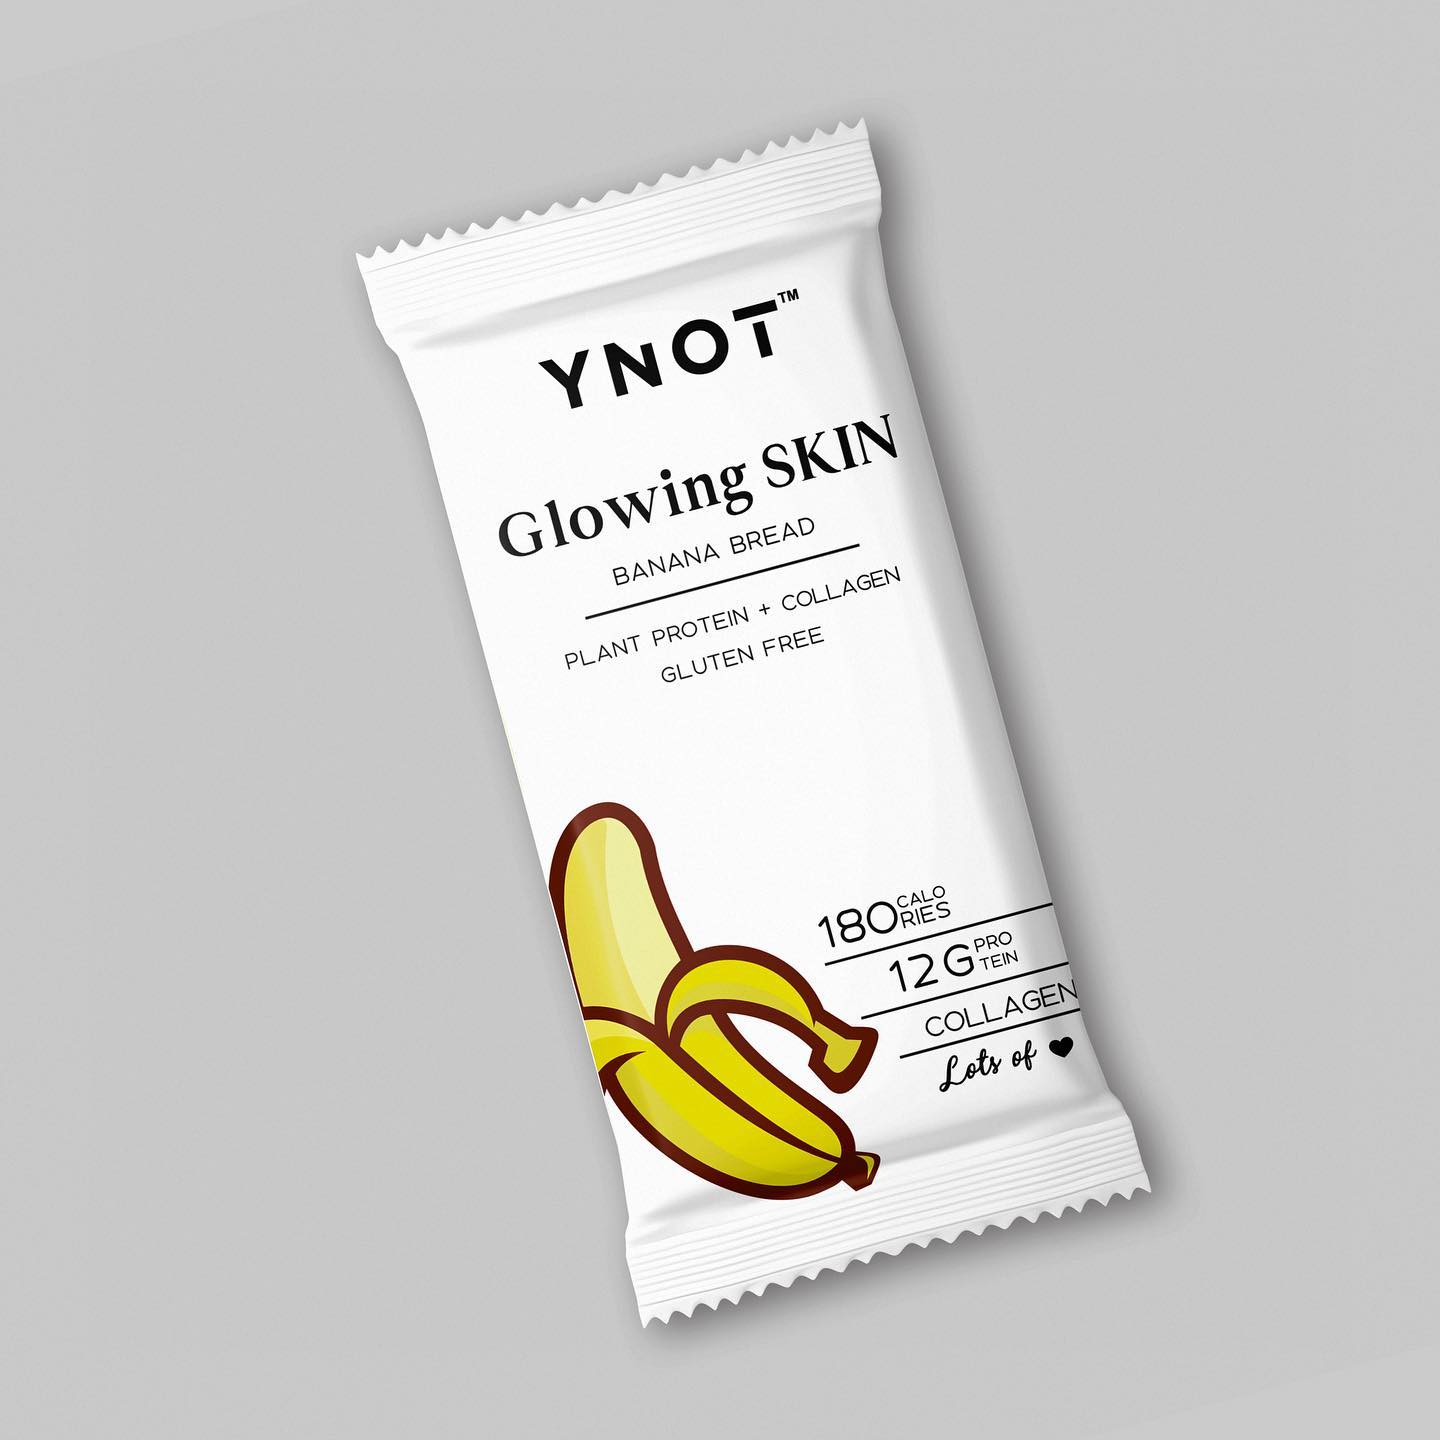 YNOT Glowing Skin Bars